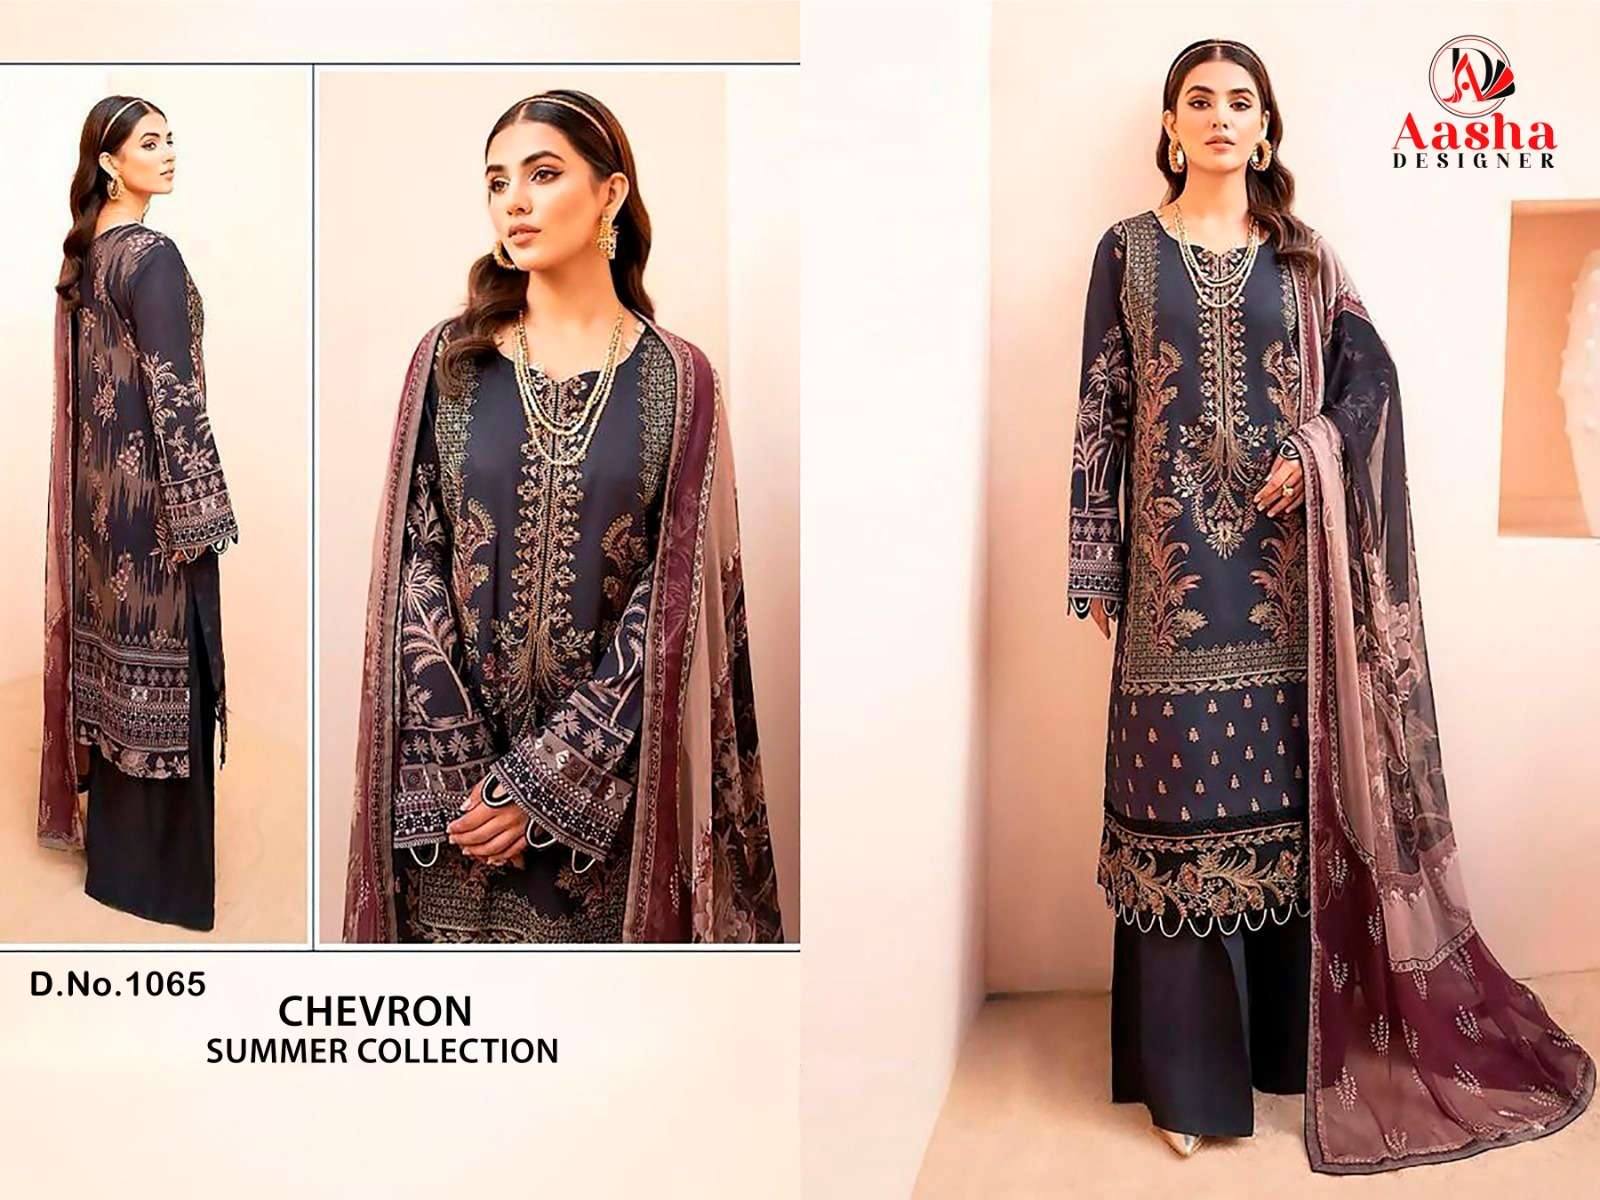 Aasha Chevron Summer Collection Cotton Dupatta Pakistani Suit Wholesale catalog